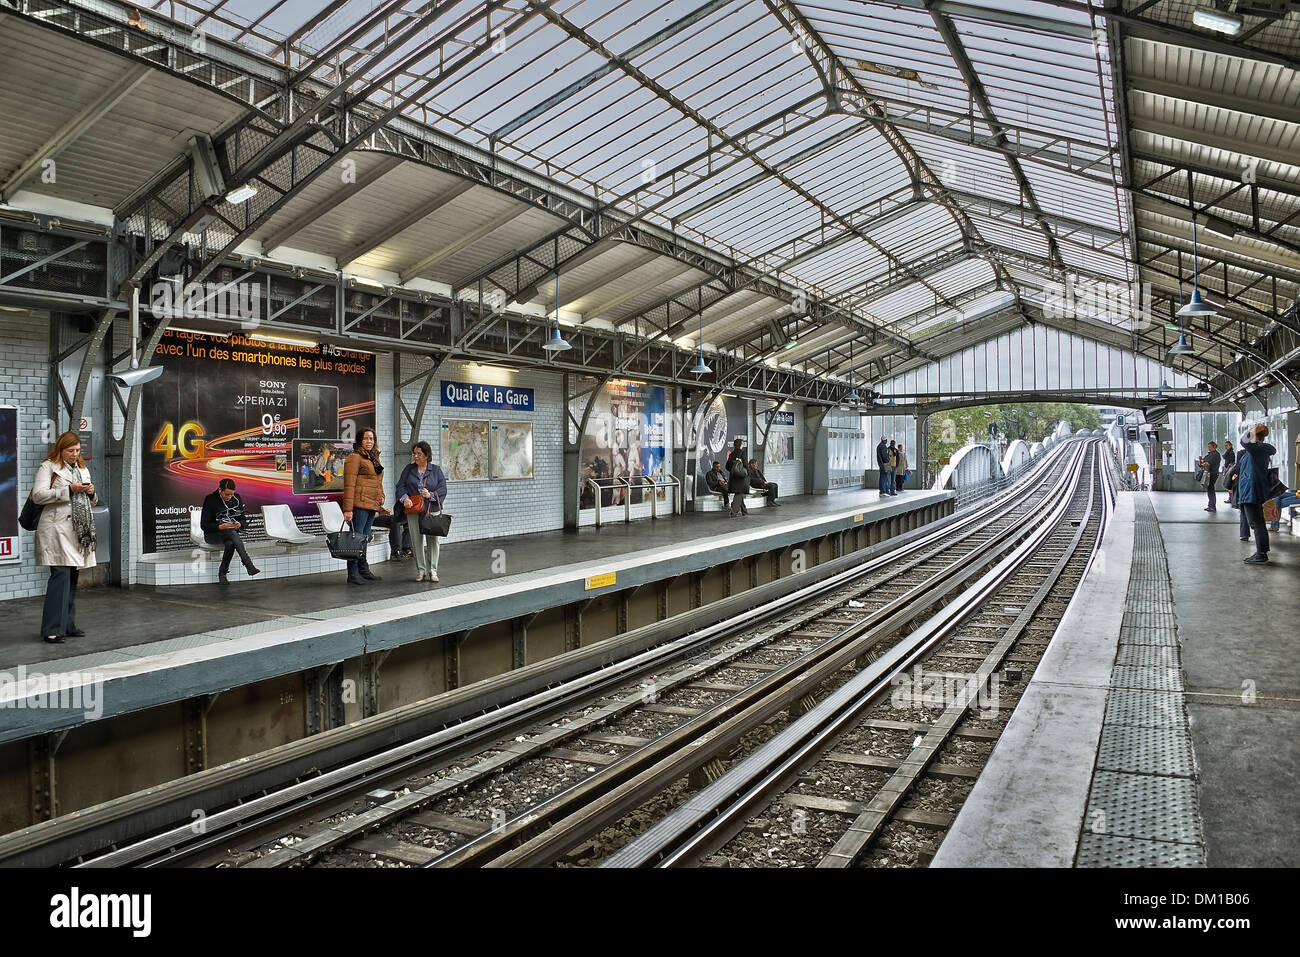 Platform of the metro station 'Quai de la Gare' - Paris, France Stock Photo